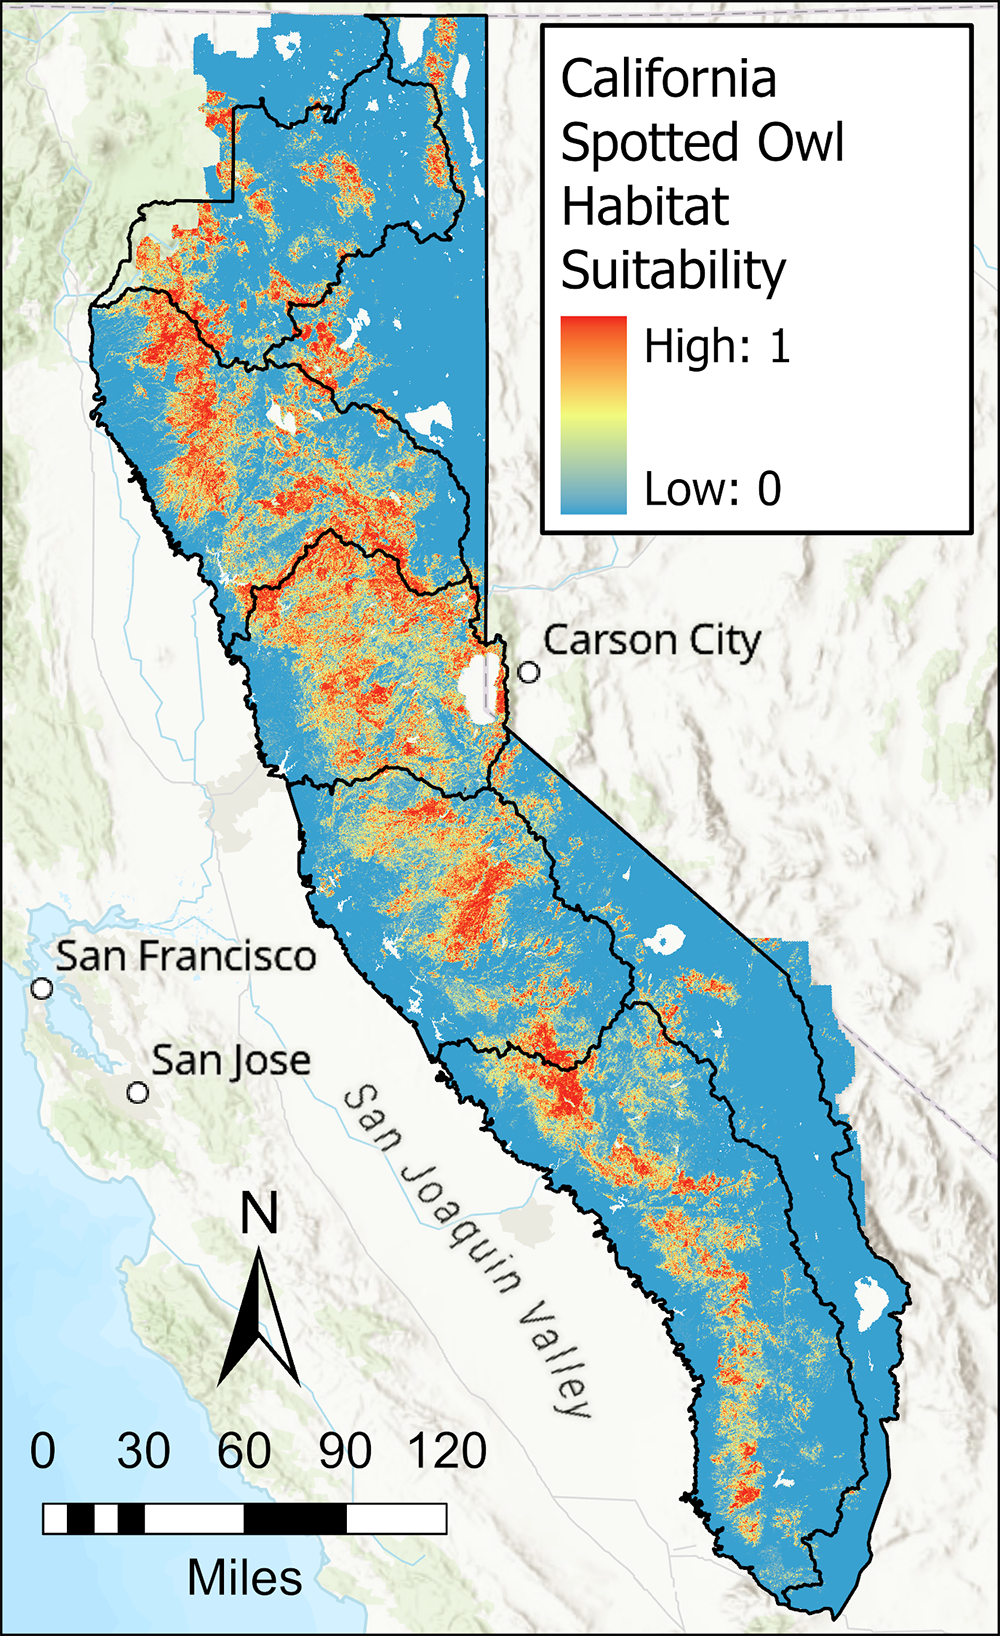 California Spotted Owl Habitat Suitability on Map of California